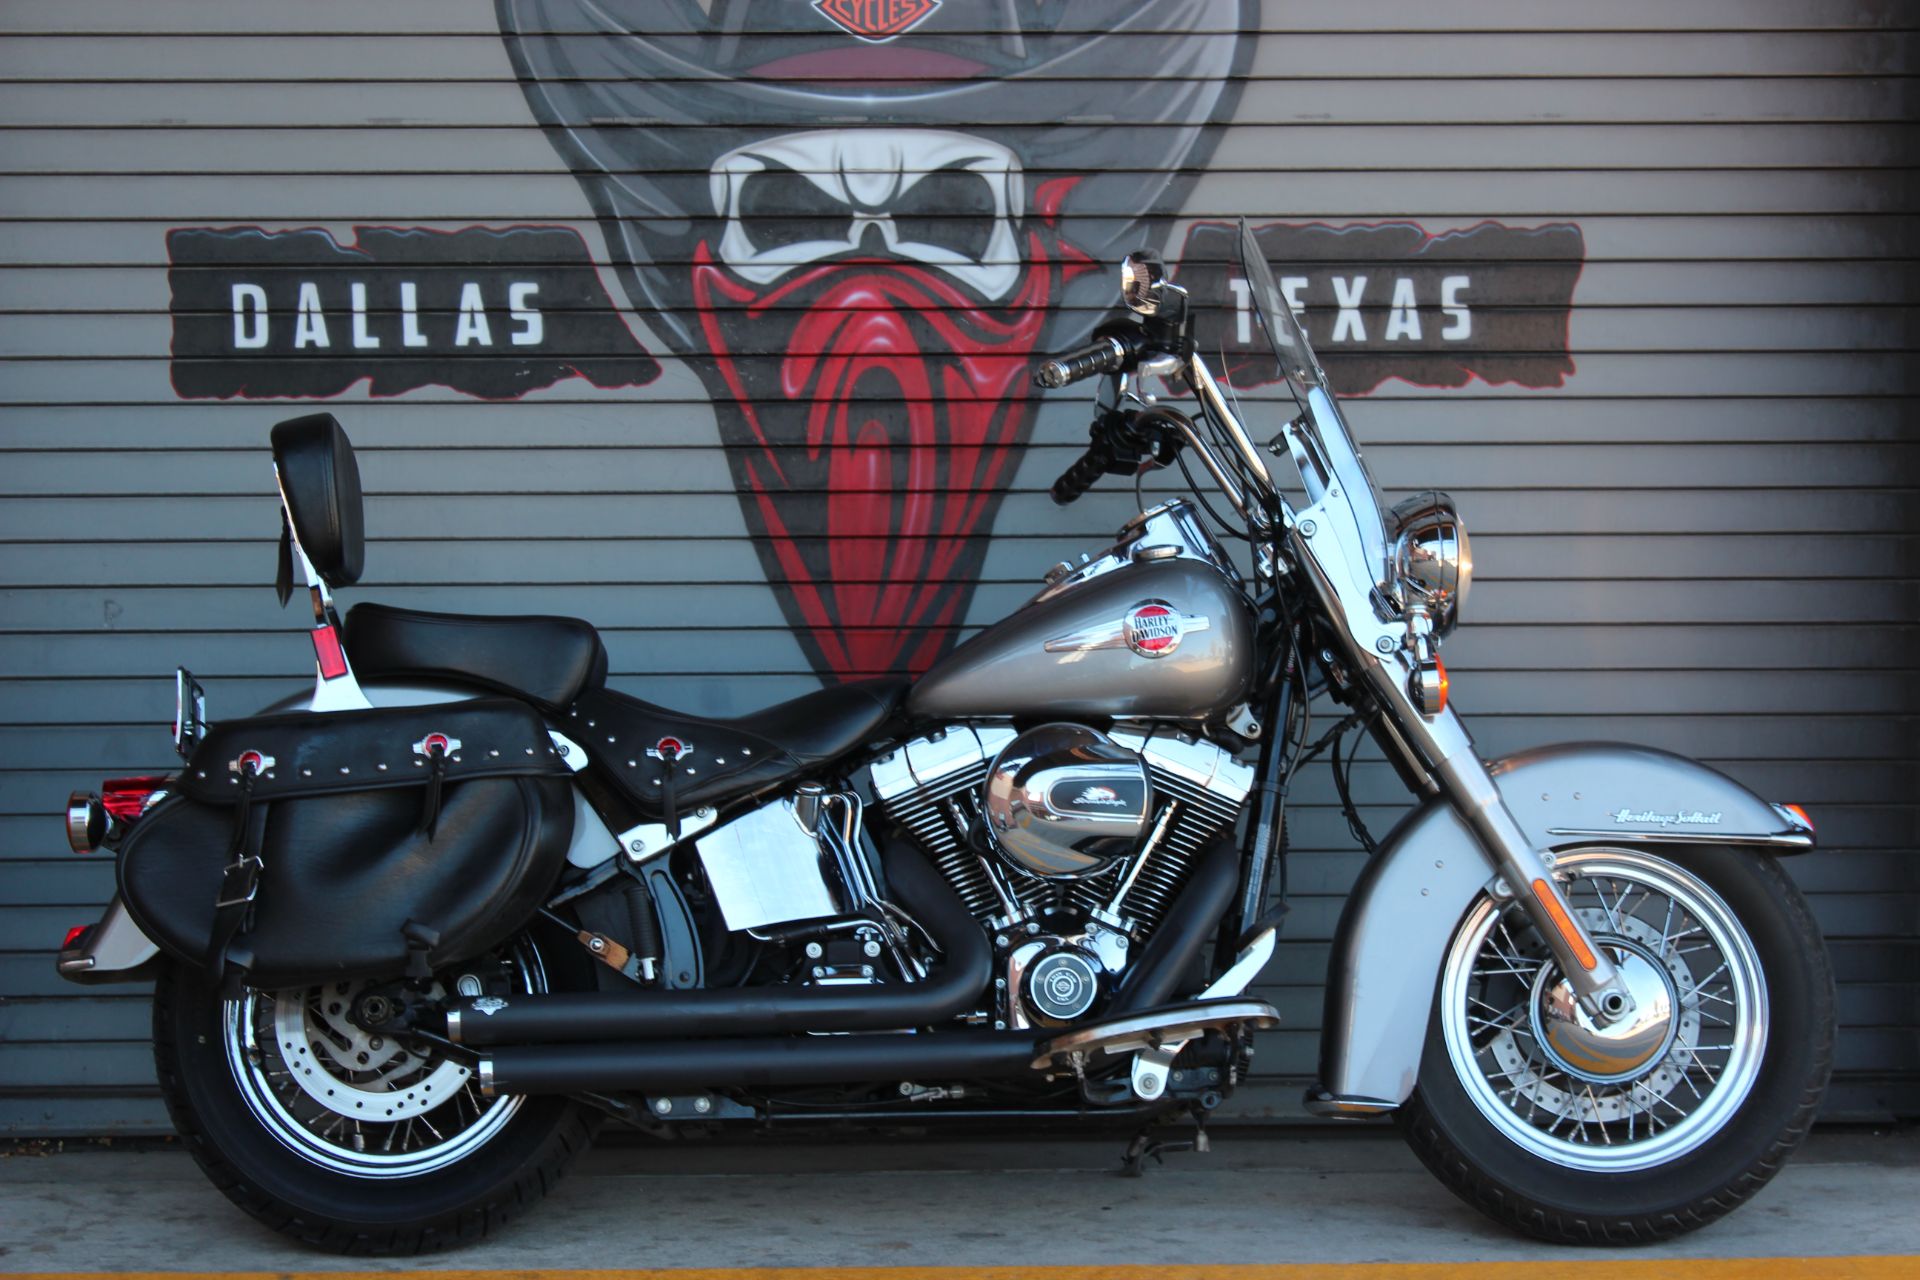 2016 Harley-Davidson Heritage Softail® Classic in Carrollton, Texas - Photo 3